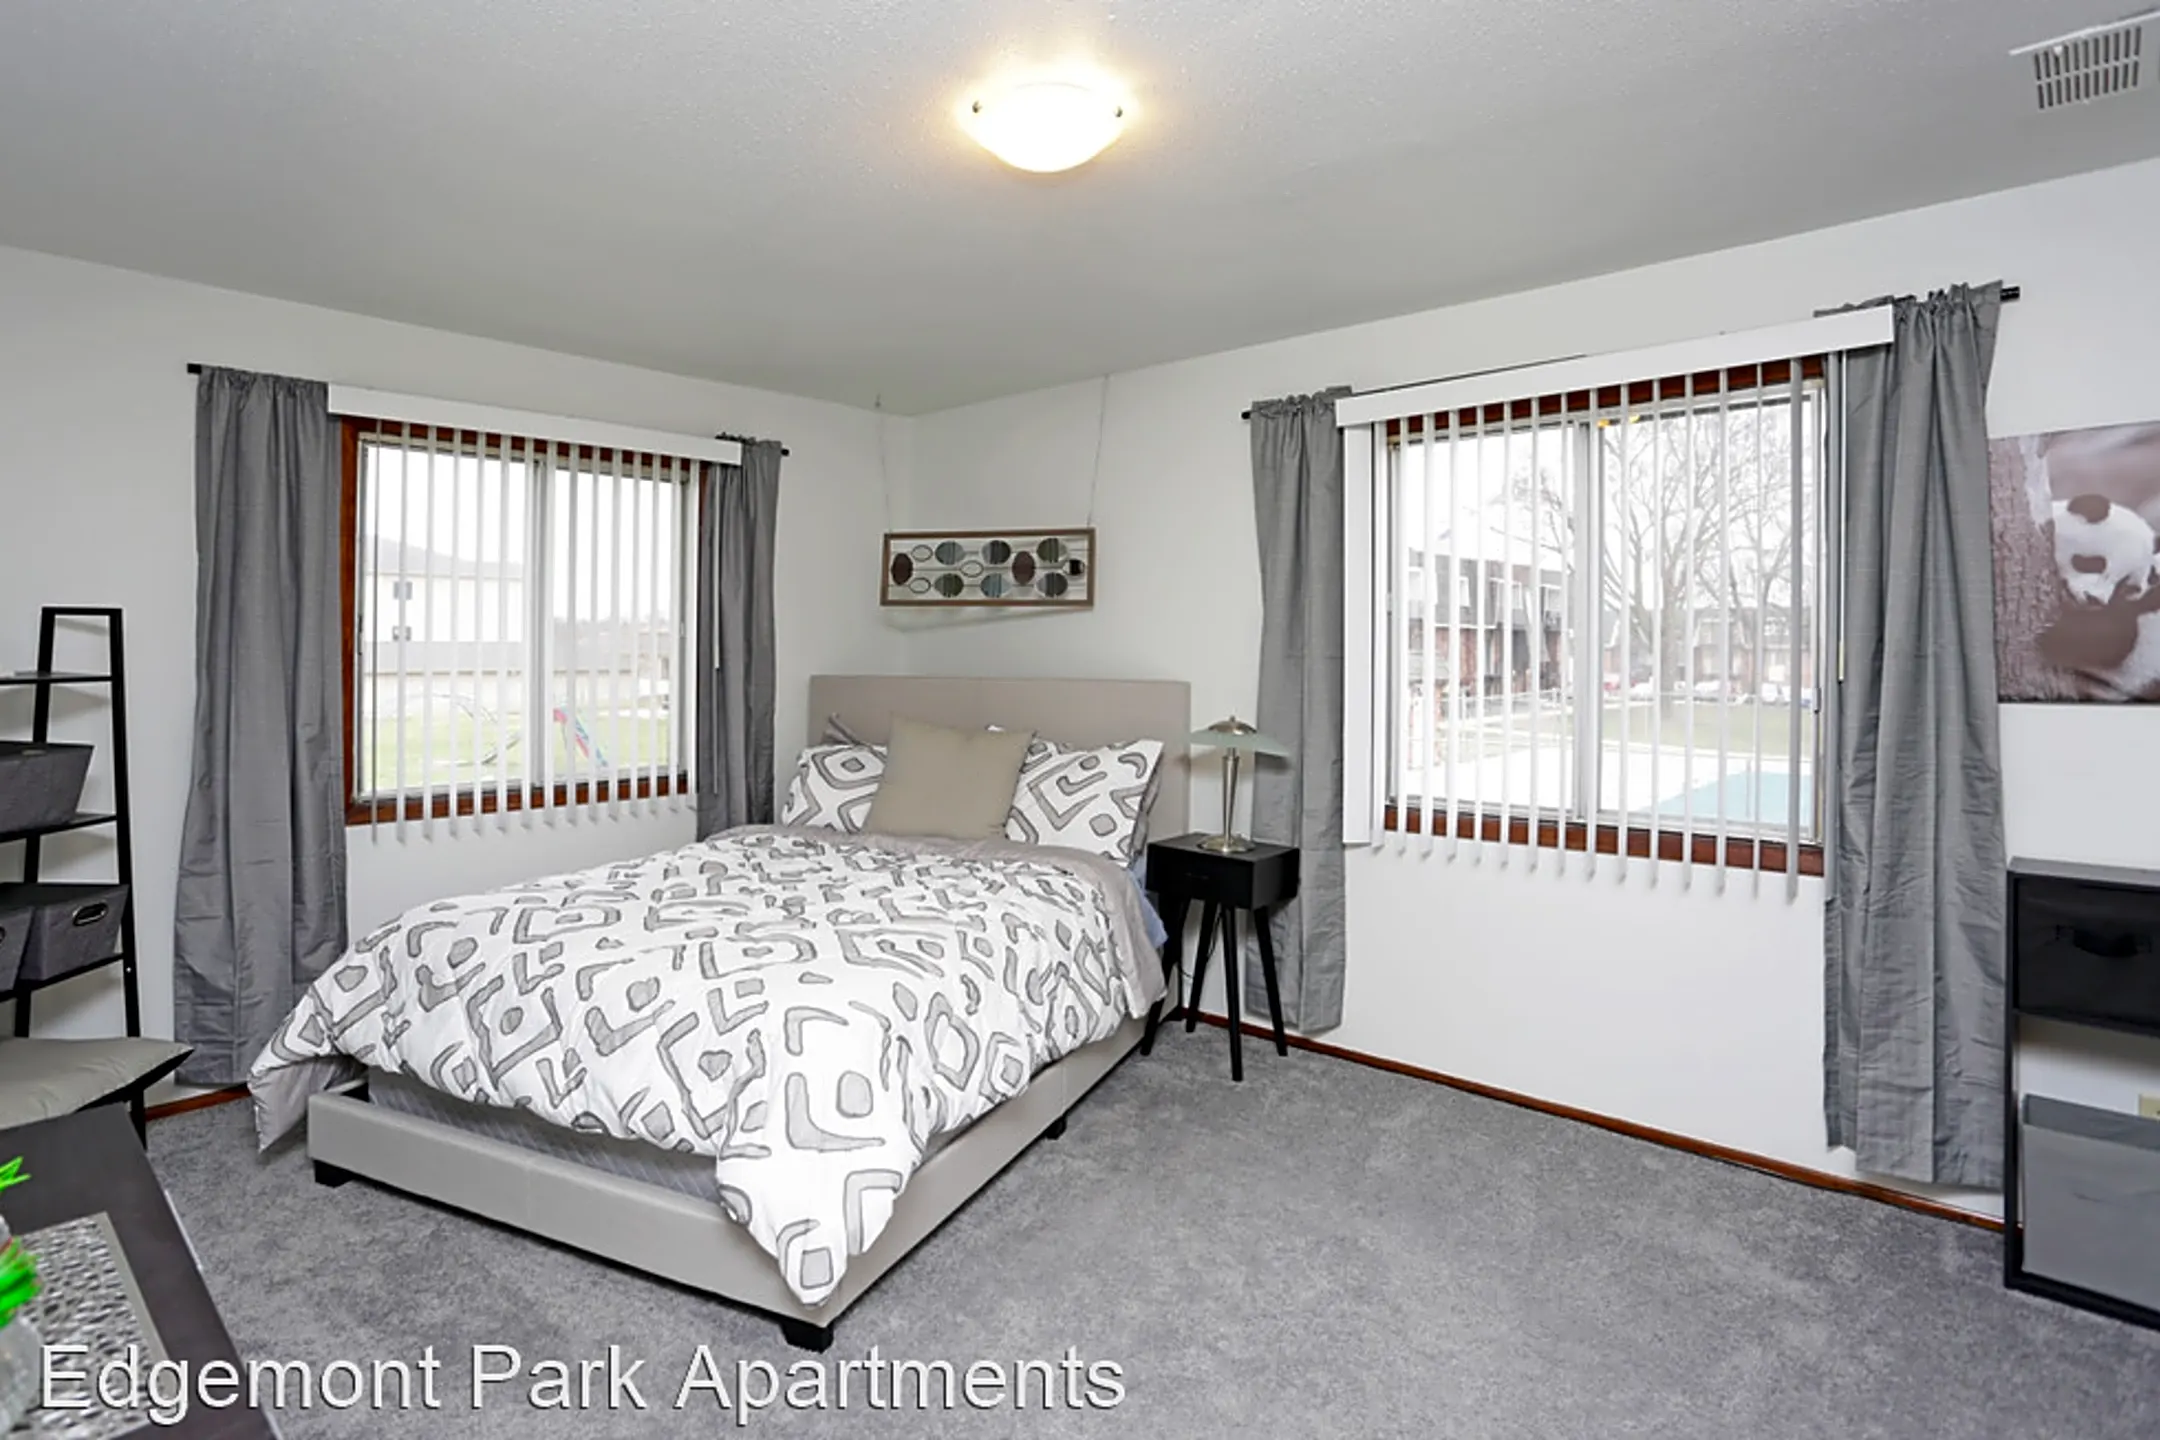 Bedroom - Edgemont Park Apartments - Waterloo, IA